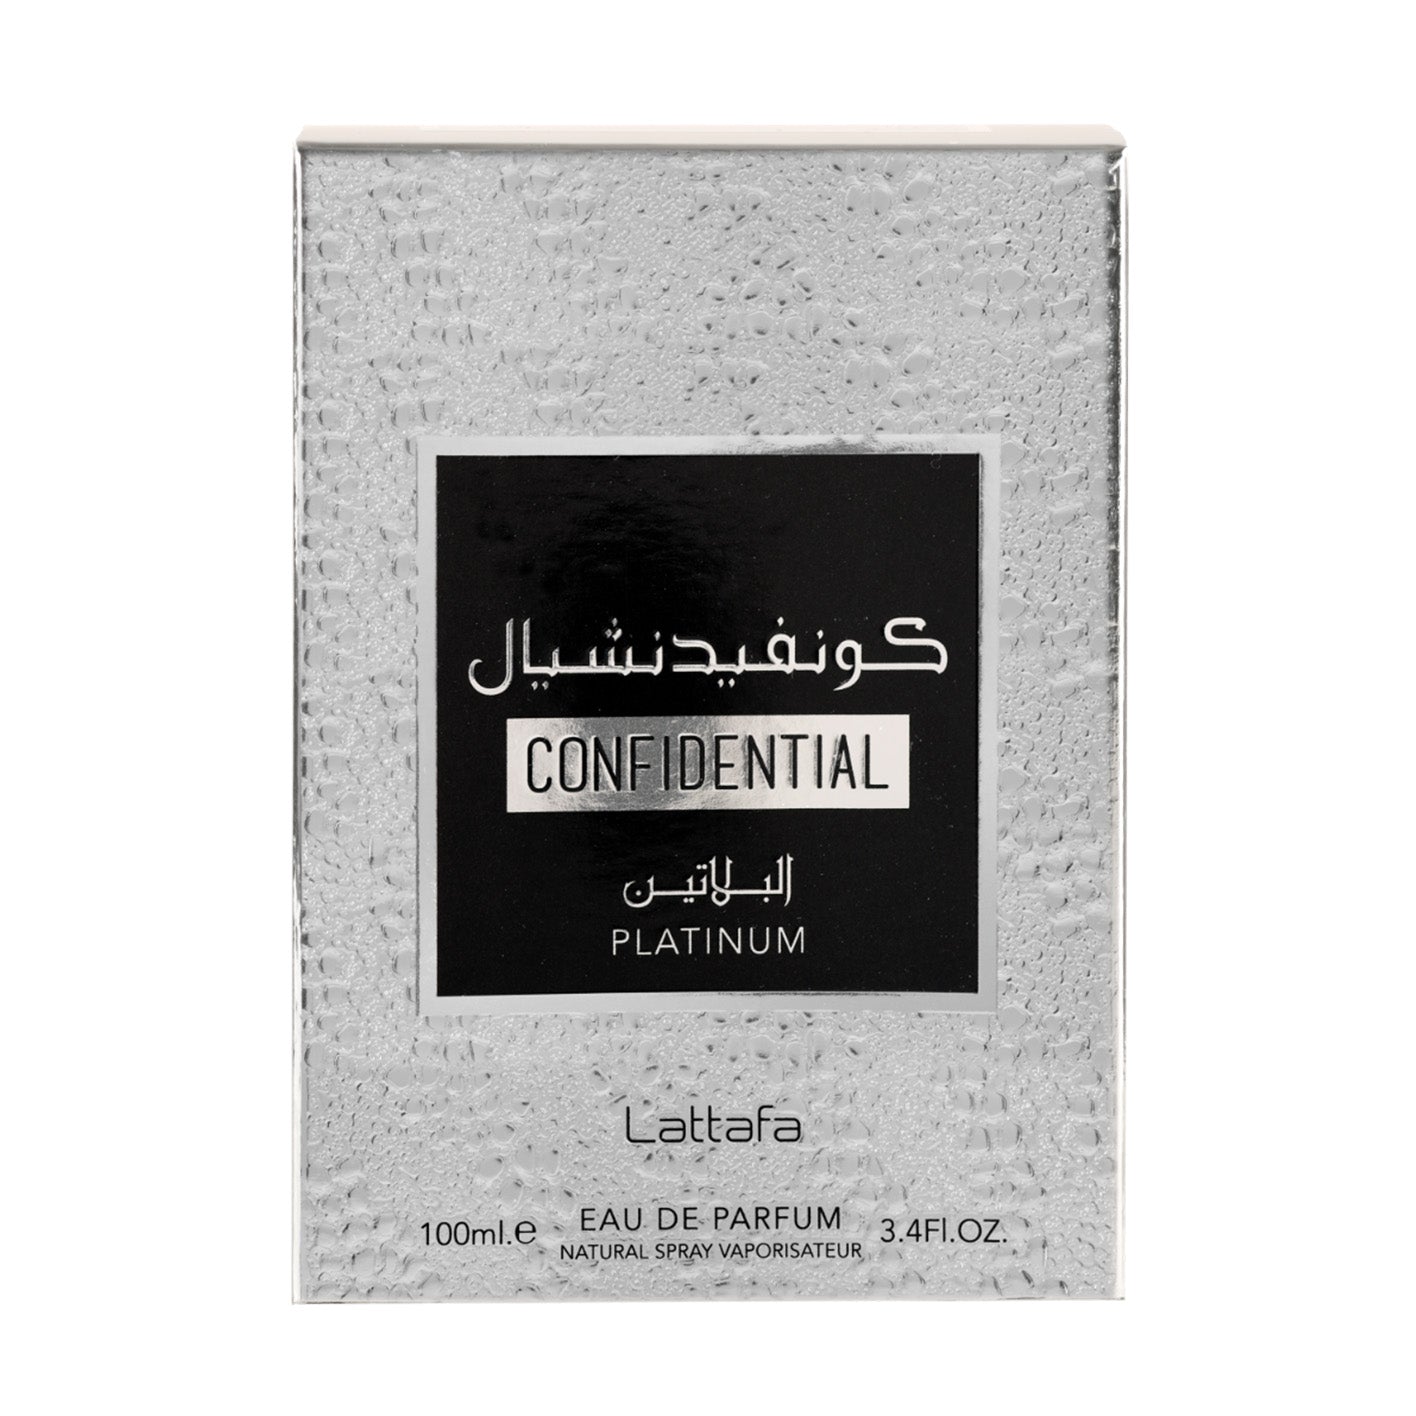 Confidential Platinum Eau de Parfum 100ml Lattafa-Perfume Heaven